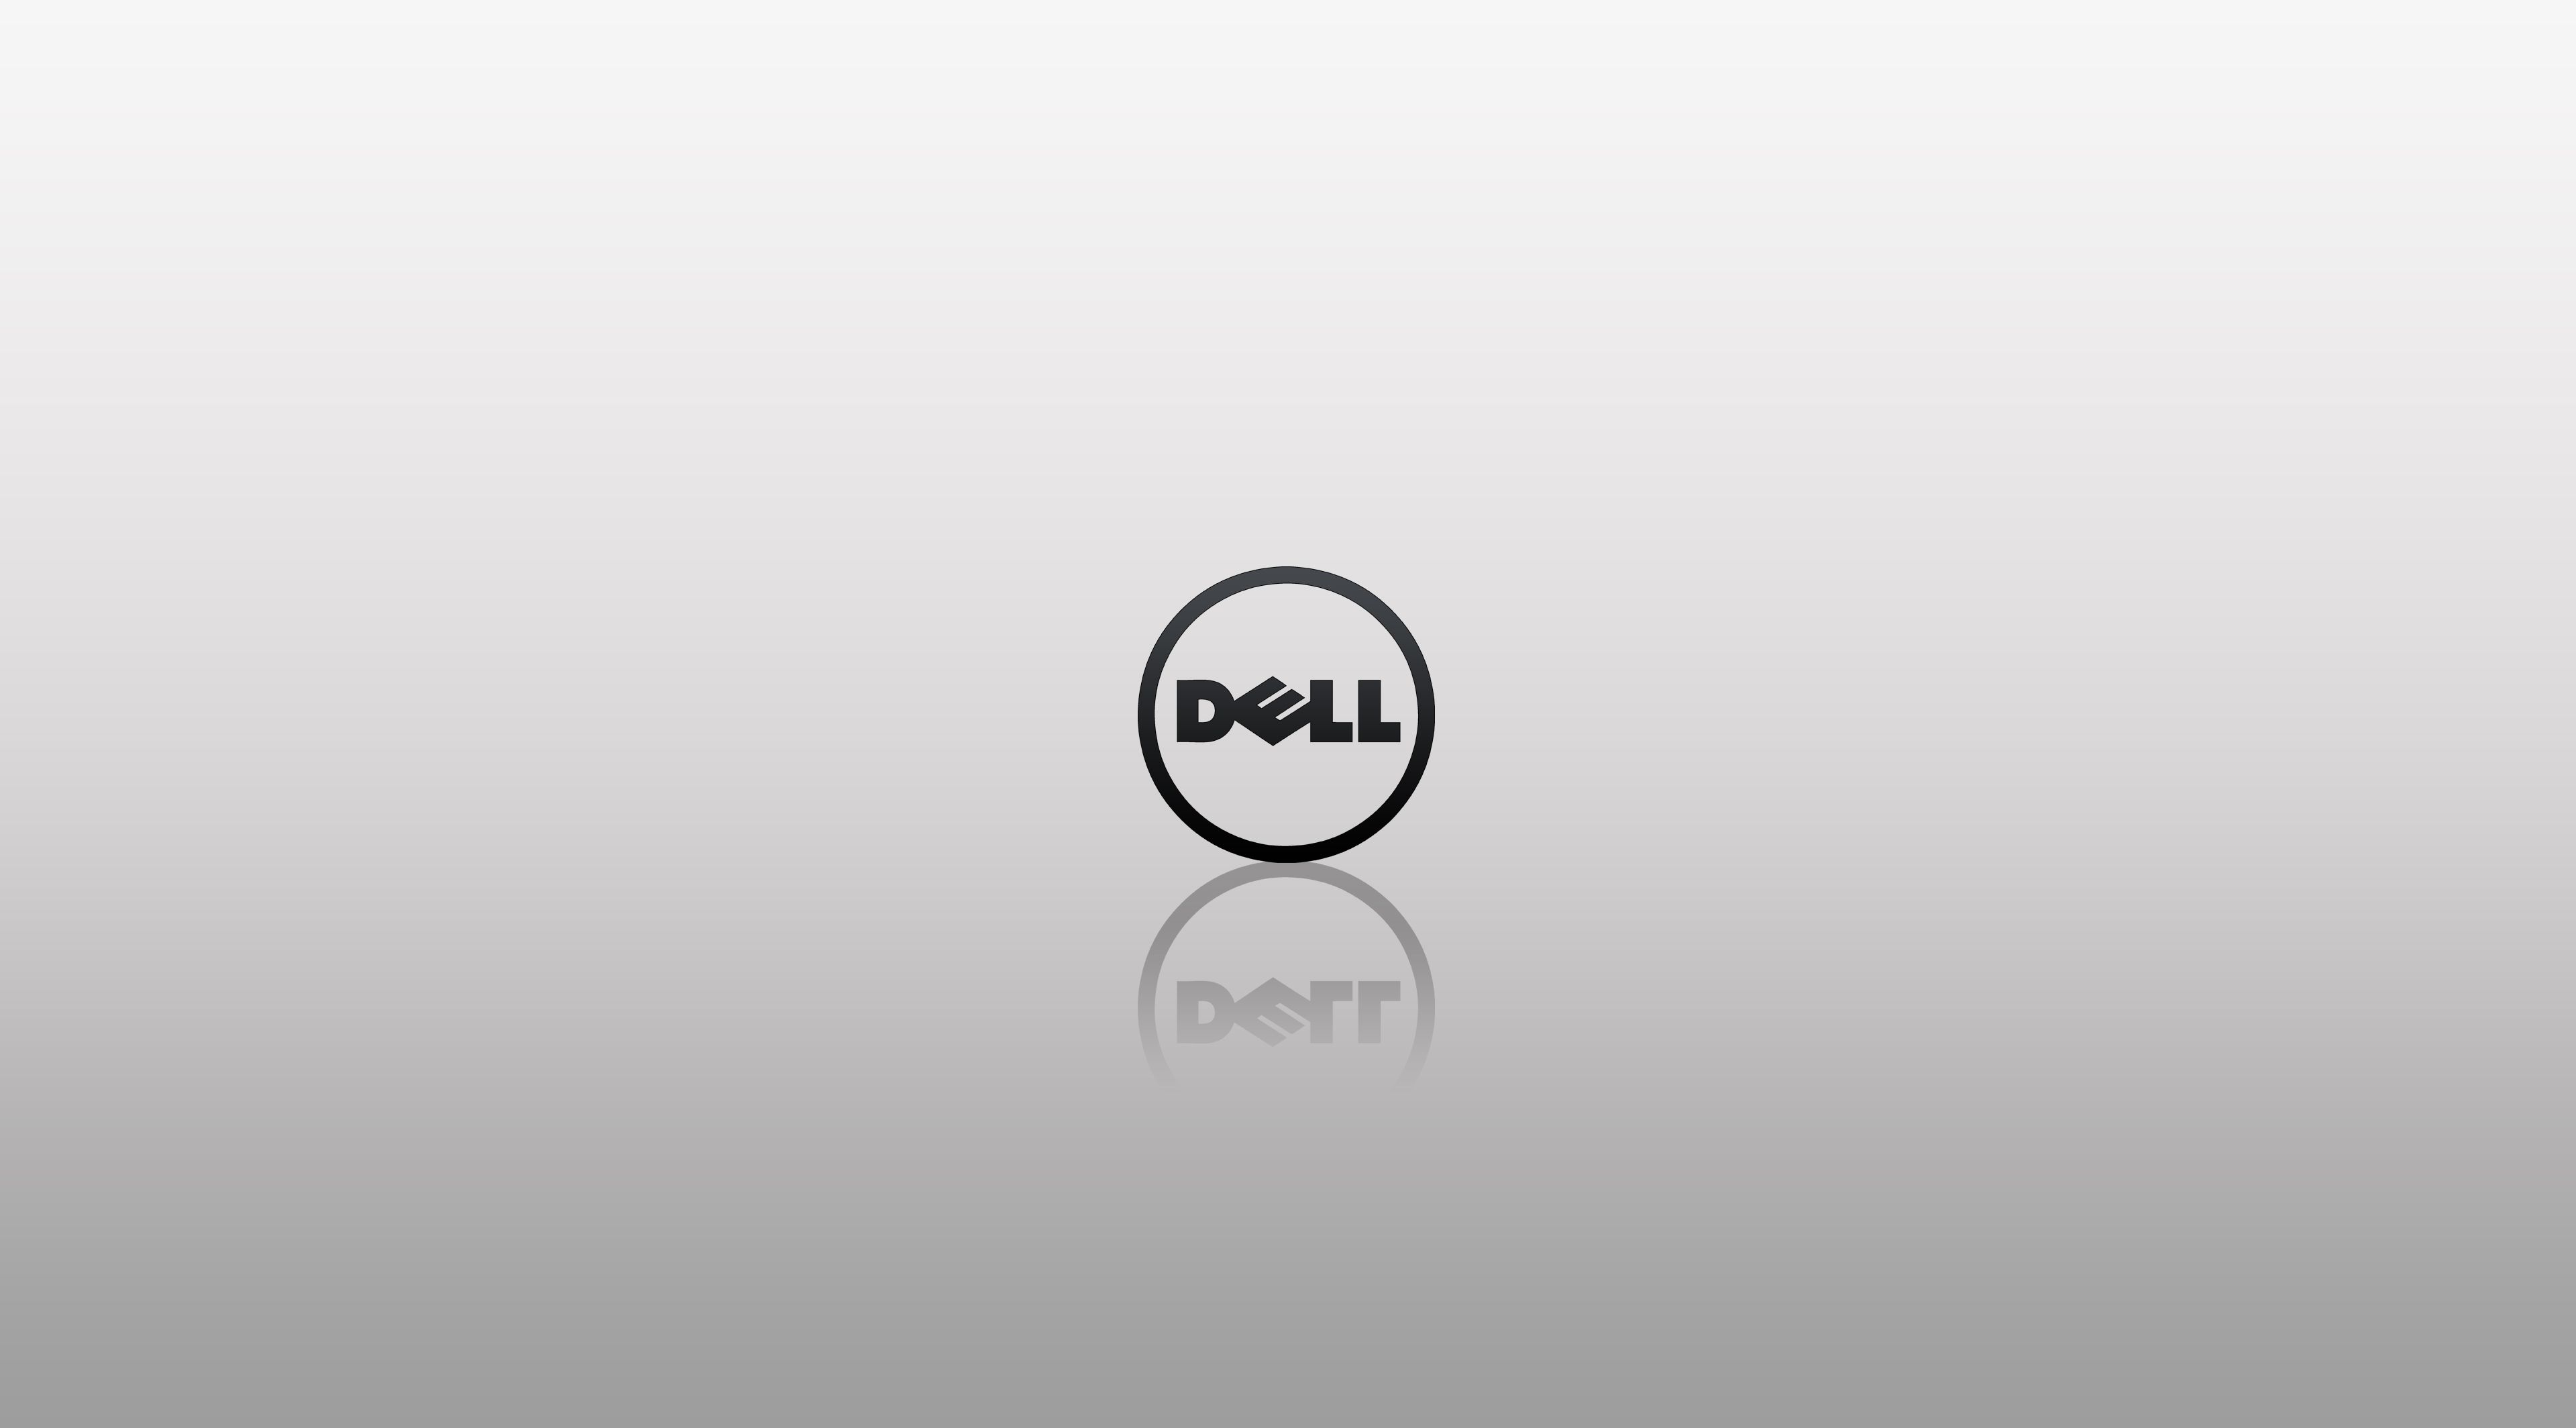 Dell 4k Wallpapers - Wallpaper Cave